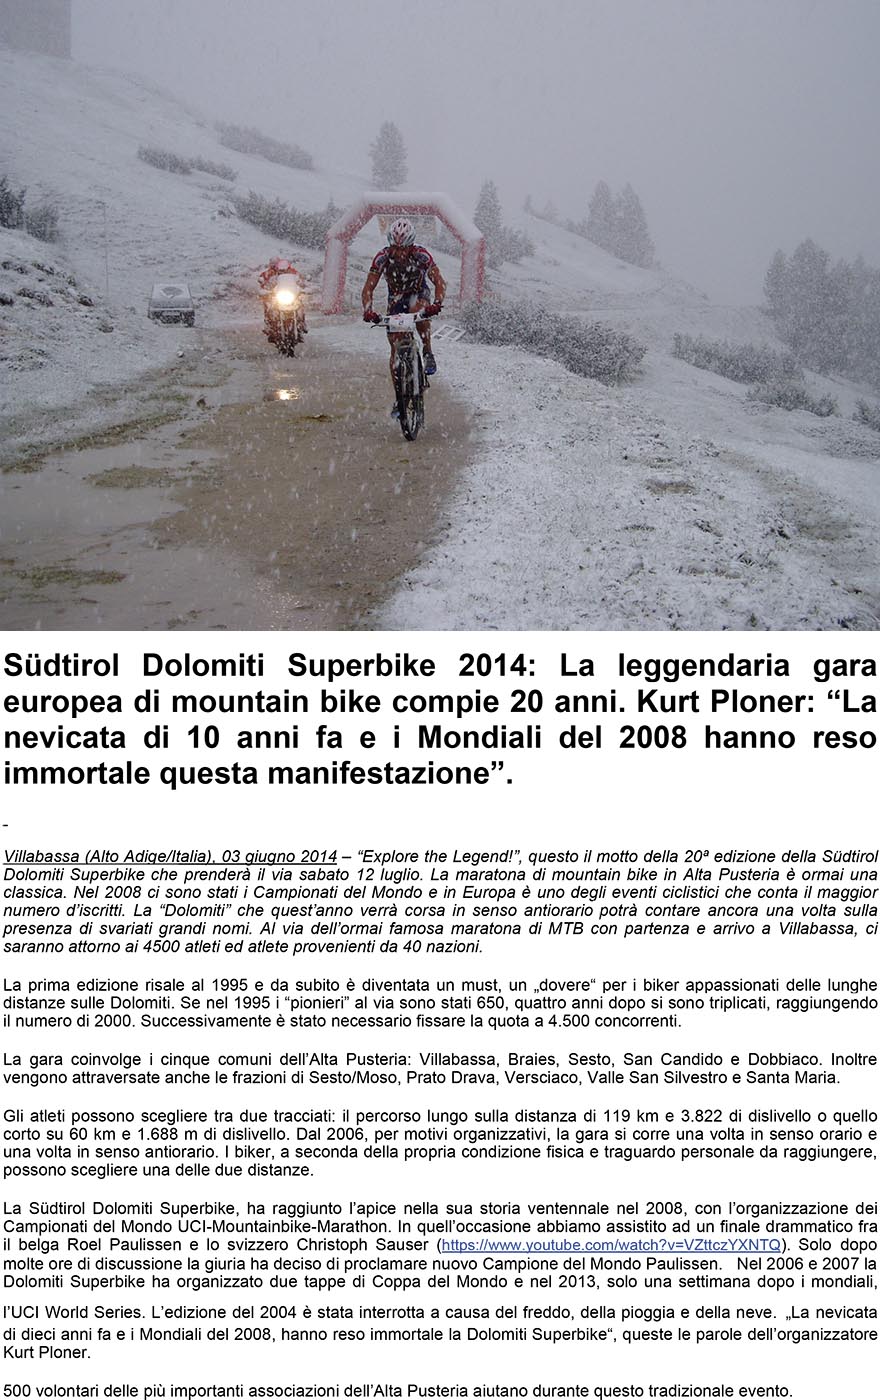 SUDTOROL DOLOMITI SUPERBILE 2014